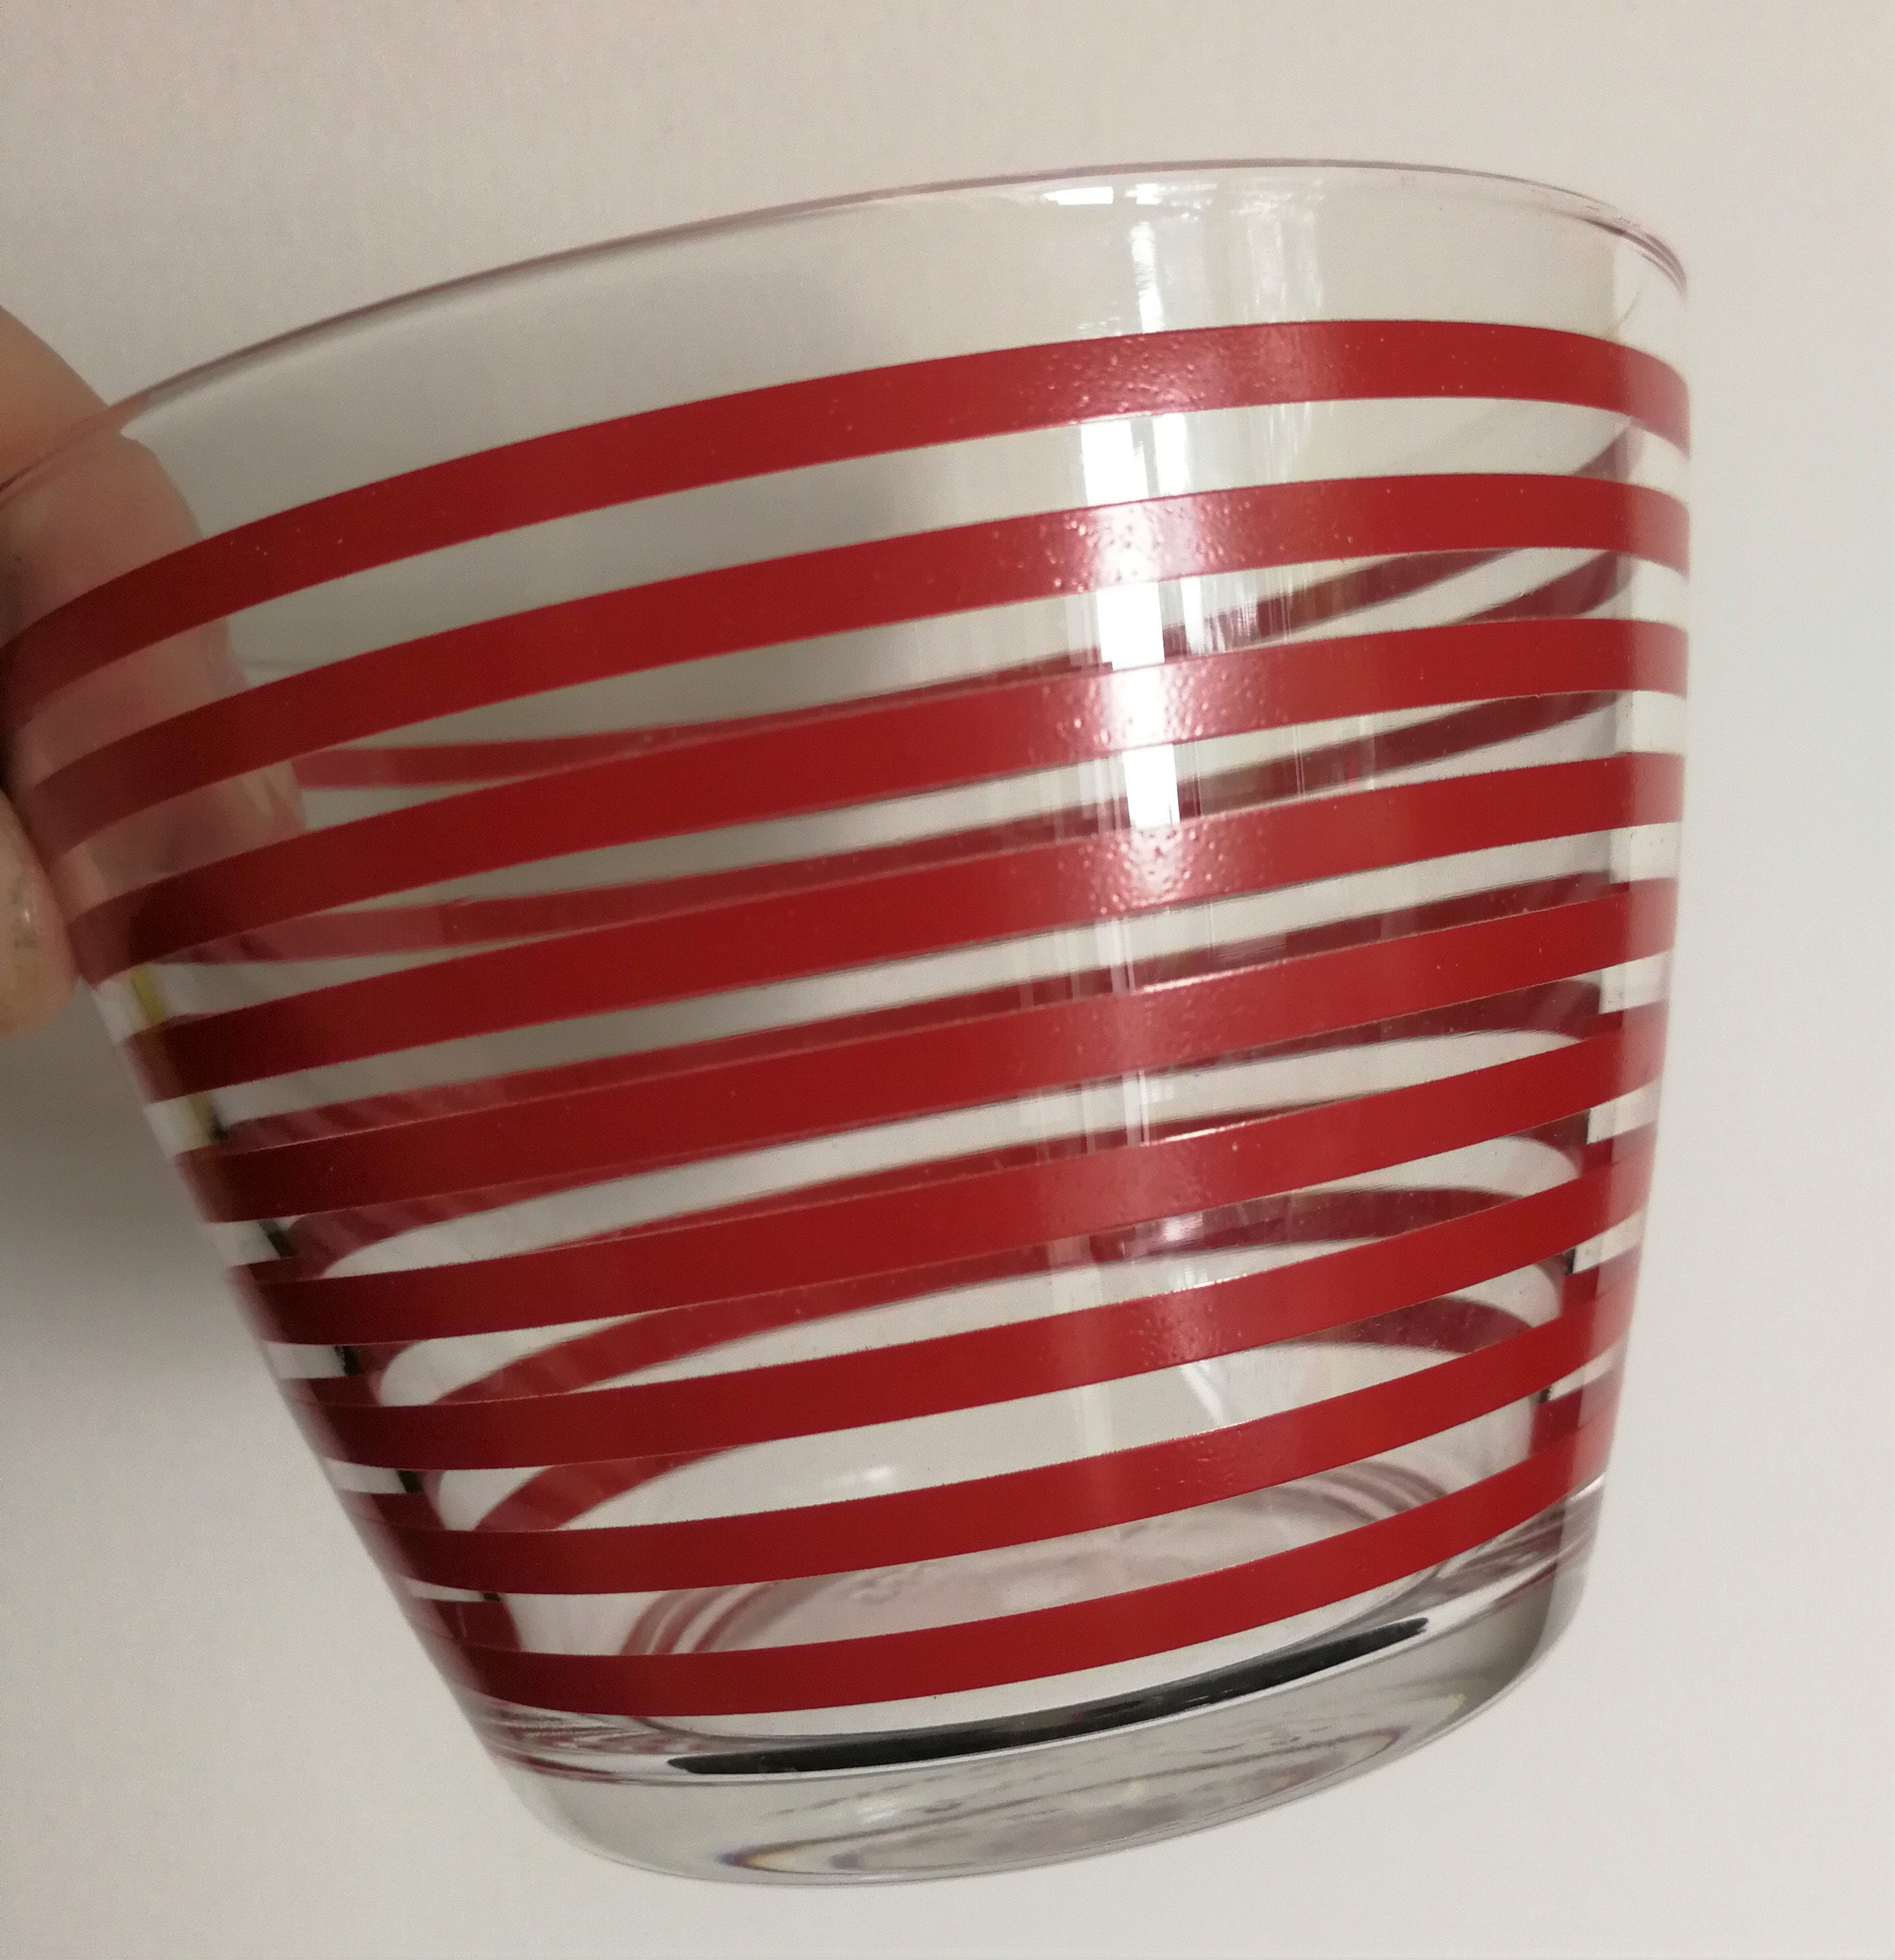 SÄLLSKAPLIG Bowl, clear glass/patterned, 6 - IKEA